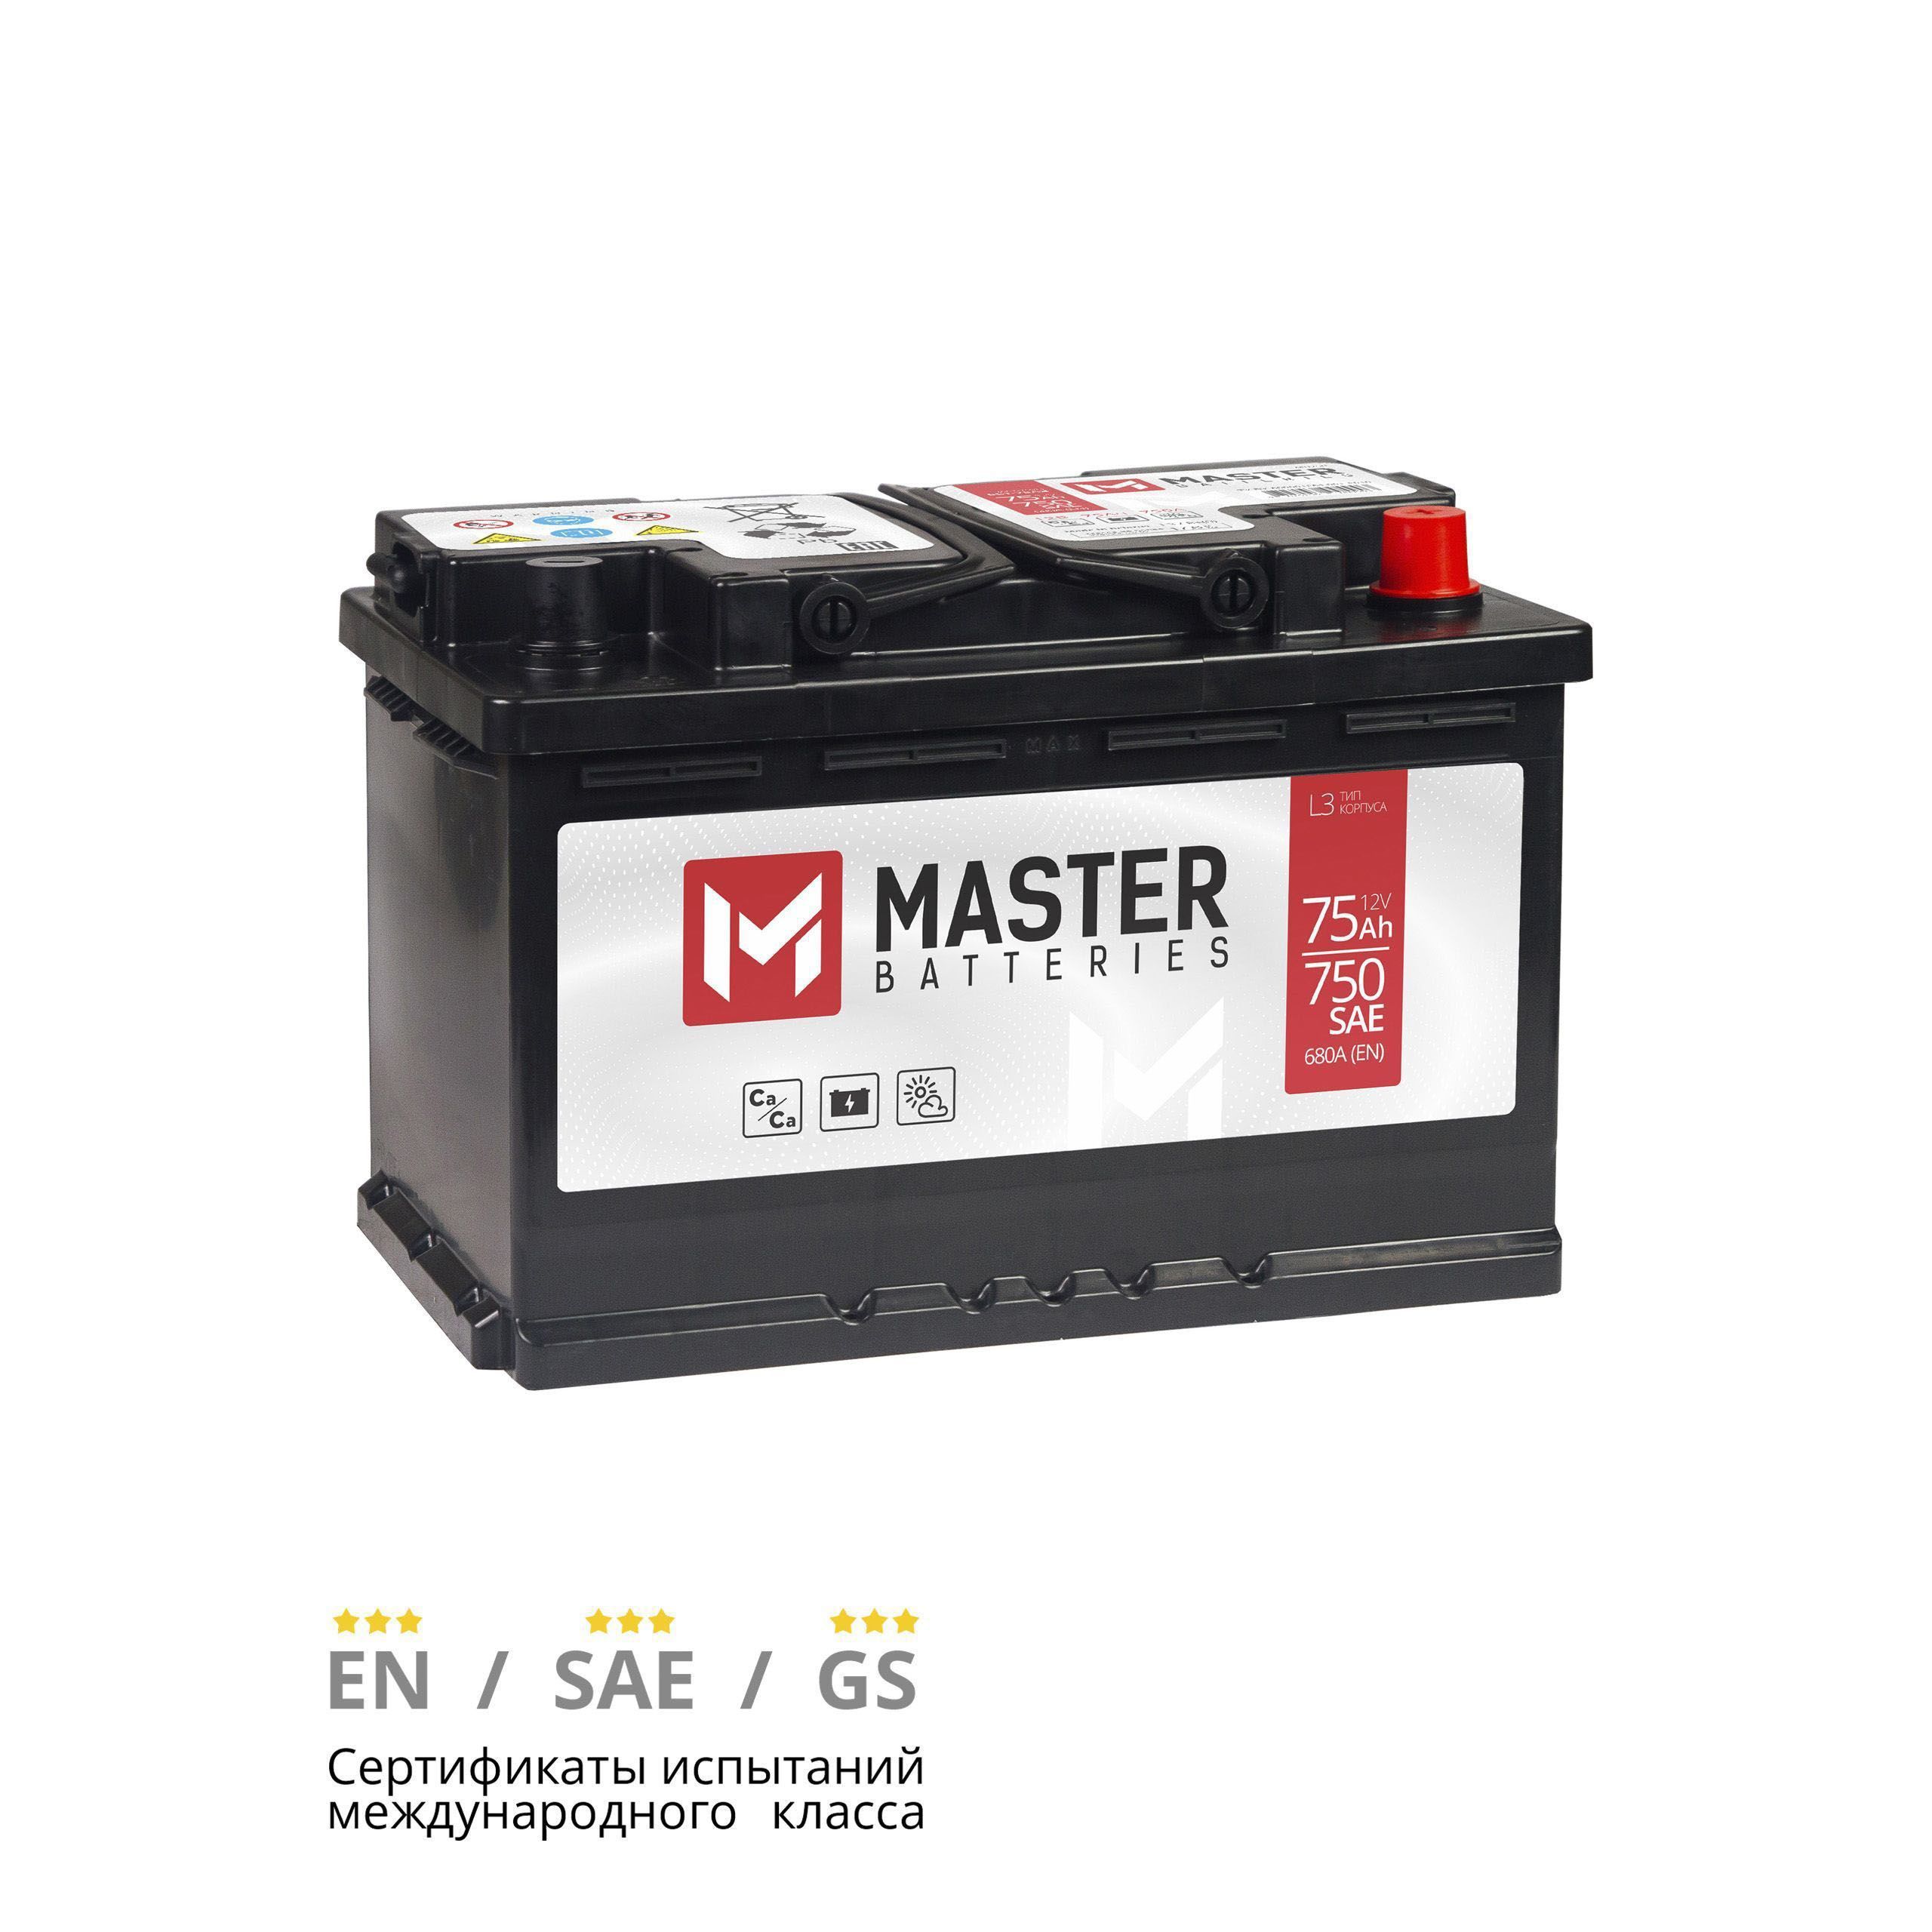 Аккумулятор Master. Аккумулятор 75ач. АКБ 6ст- 70 Master Batteries Asia евро (r+) en 550 /1ак Group Беларусь/. АКБ Мастерс логотип.